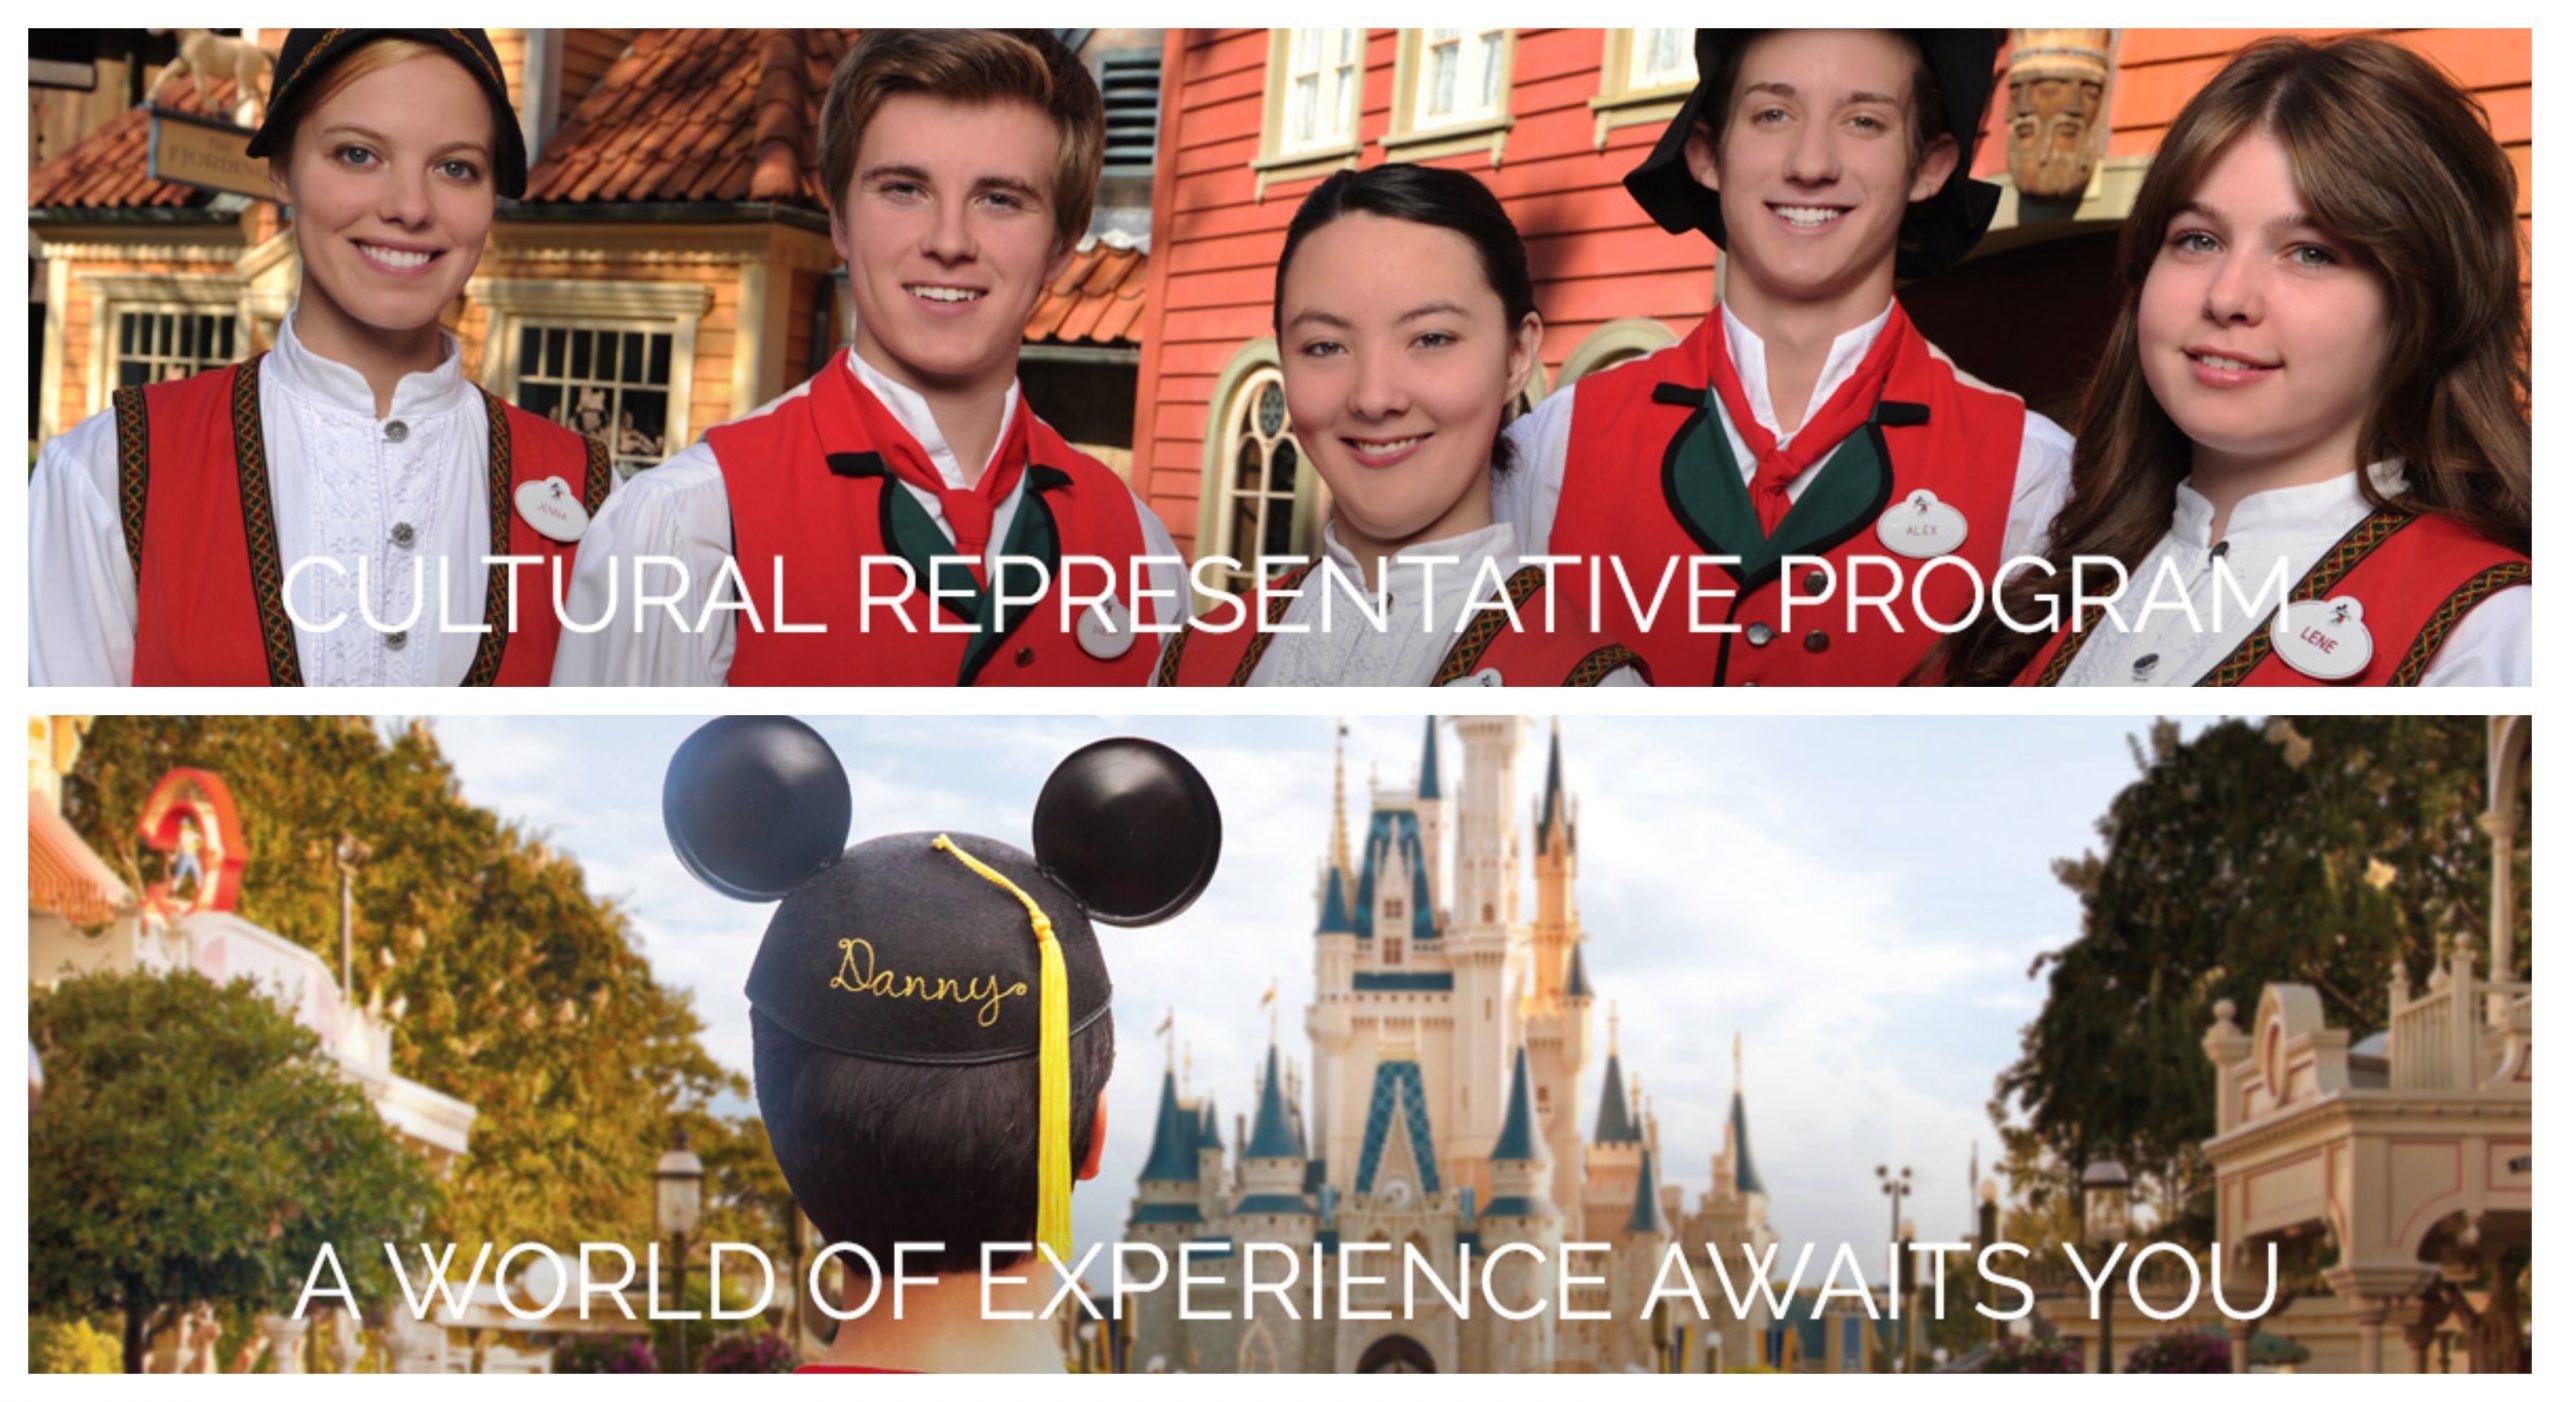 Walt Disney World has fully suspended the Cultural Representative Program